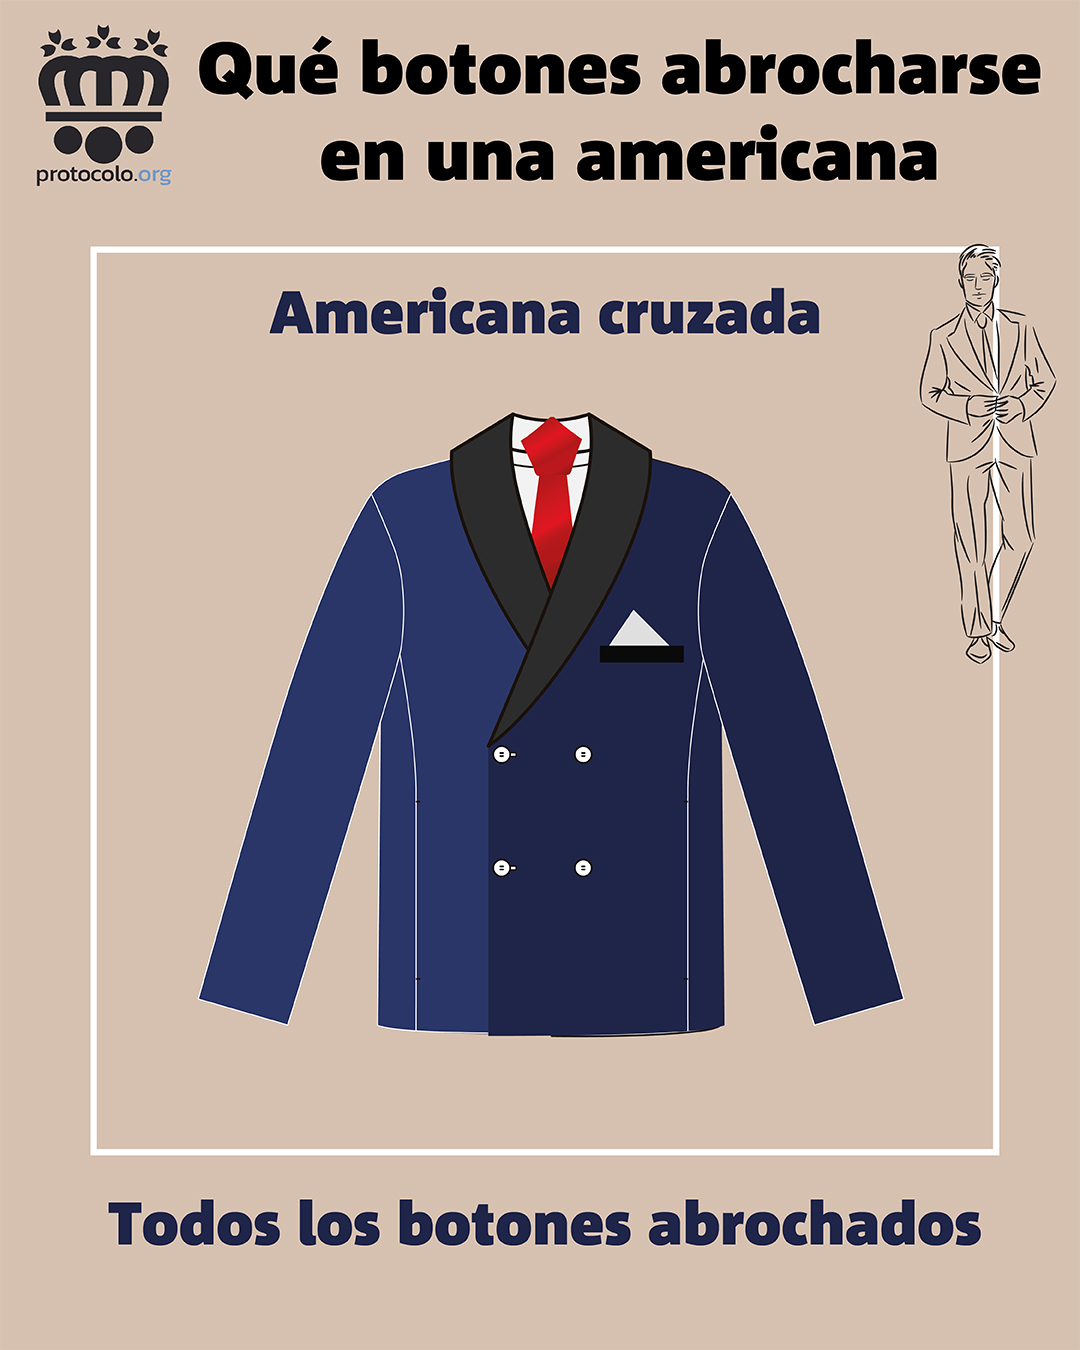 Cómo abrocharse una chaqueta o americana cruzada cross blazer